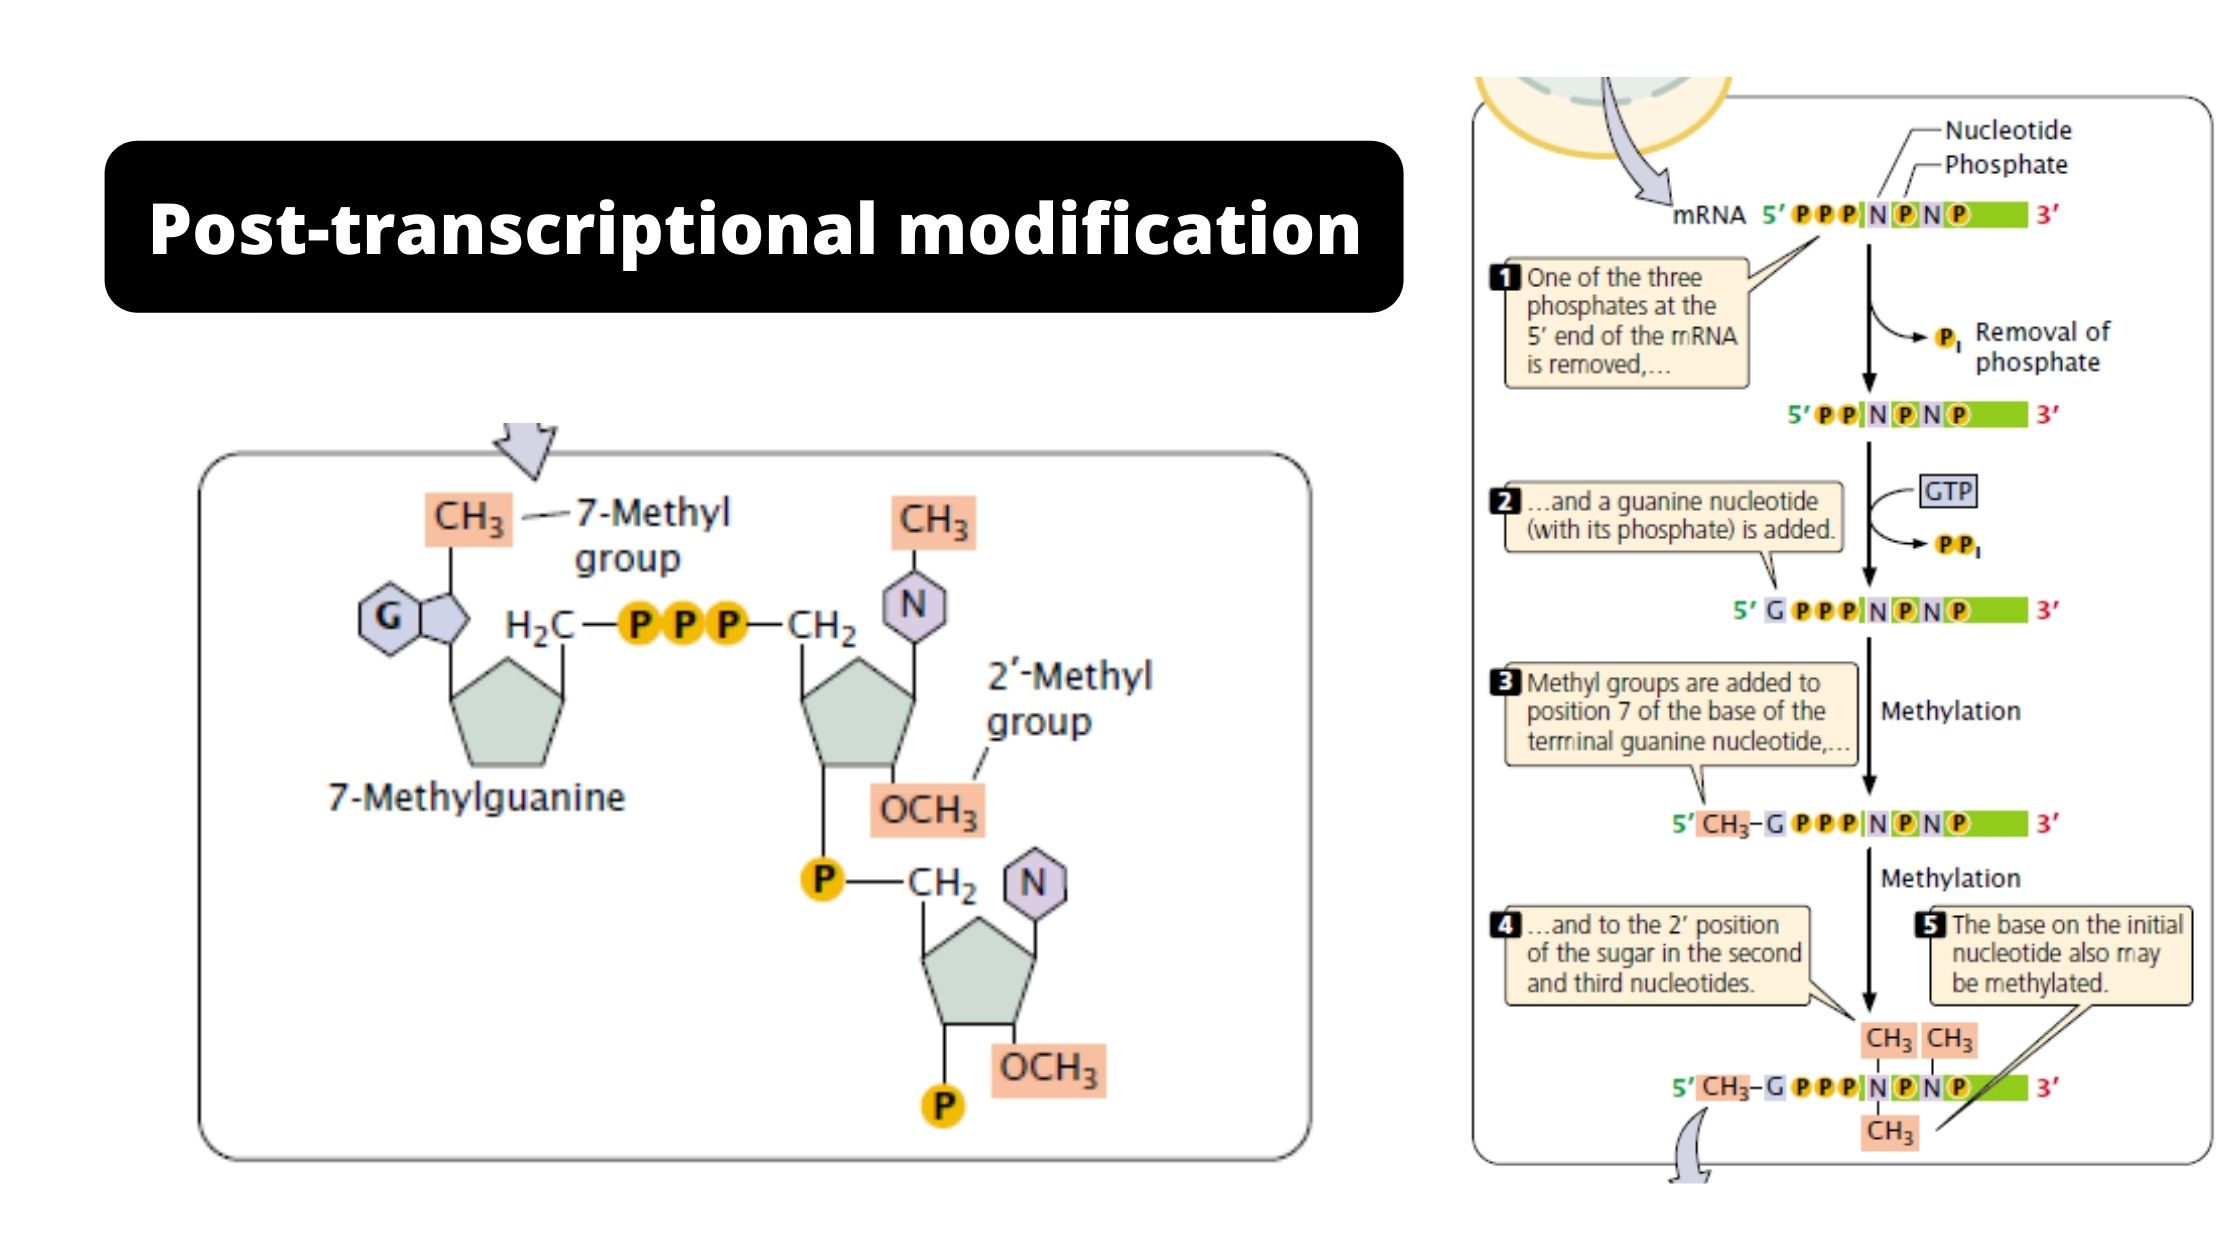 Post-transcriptional modification